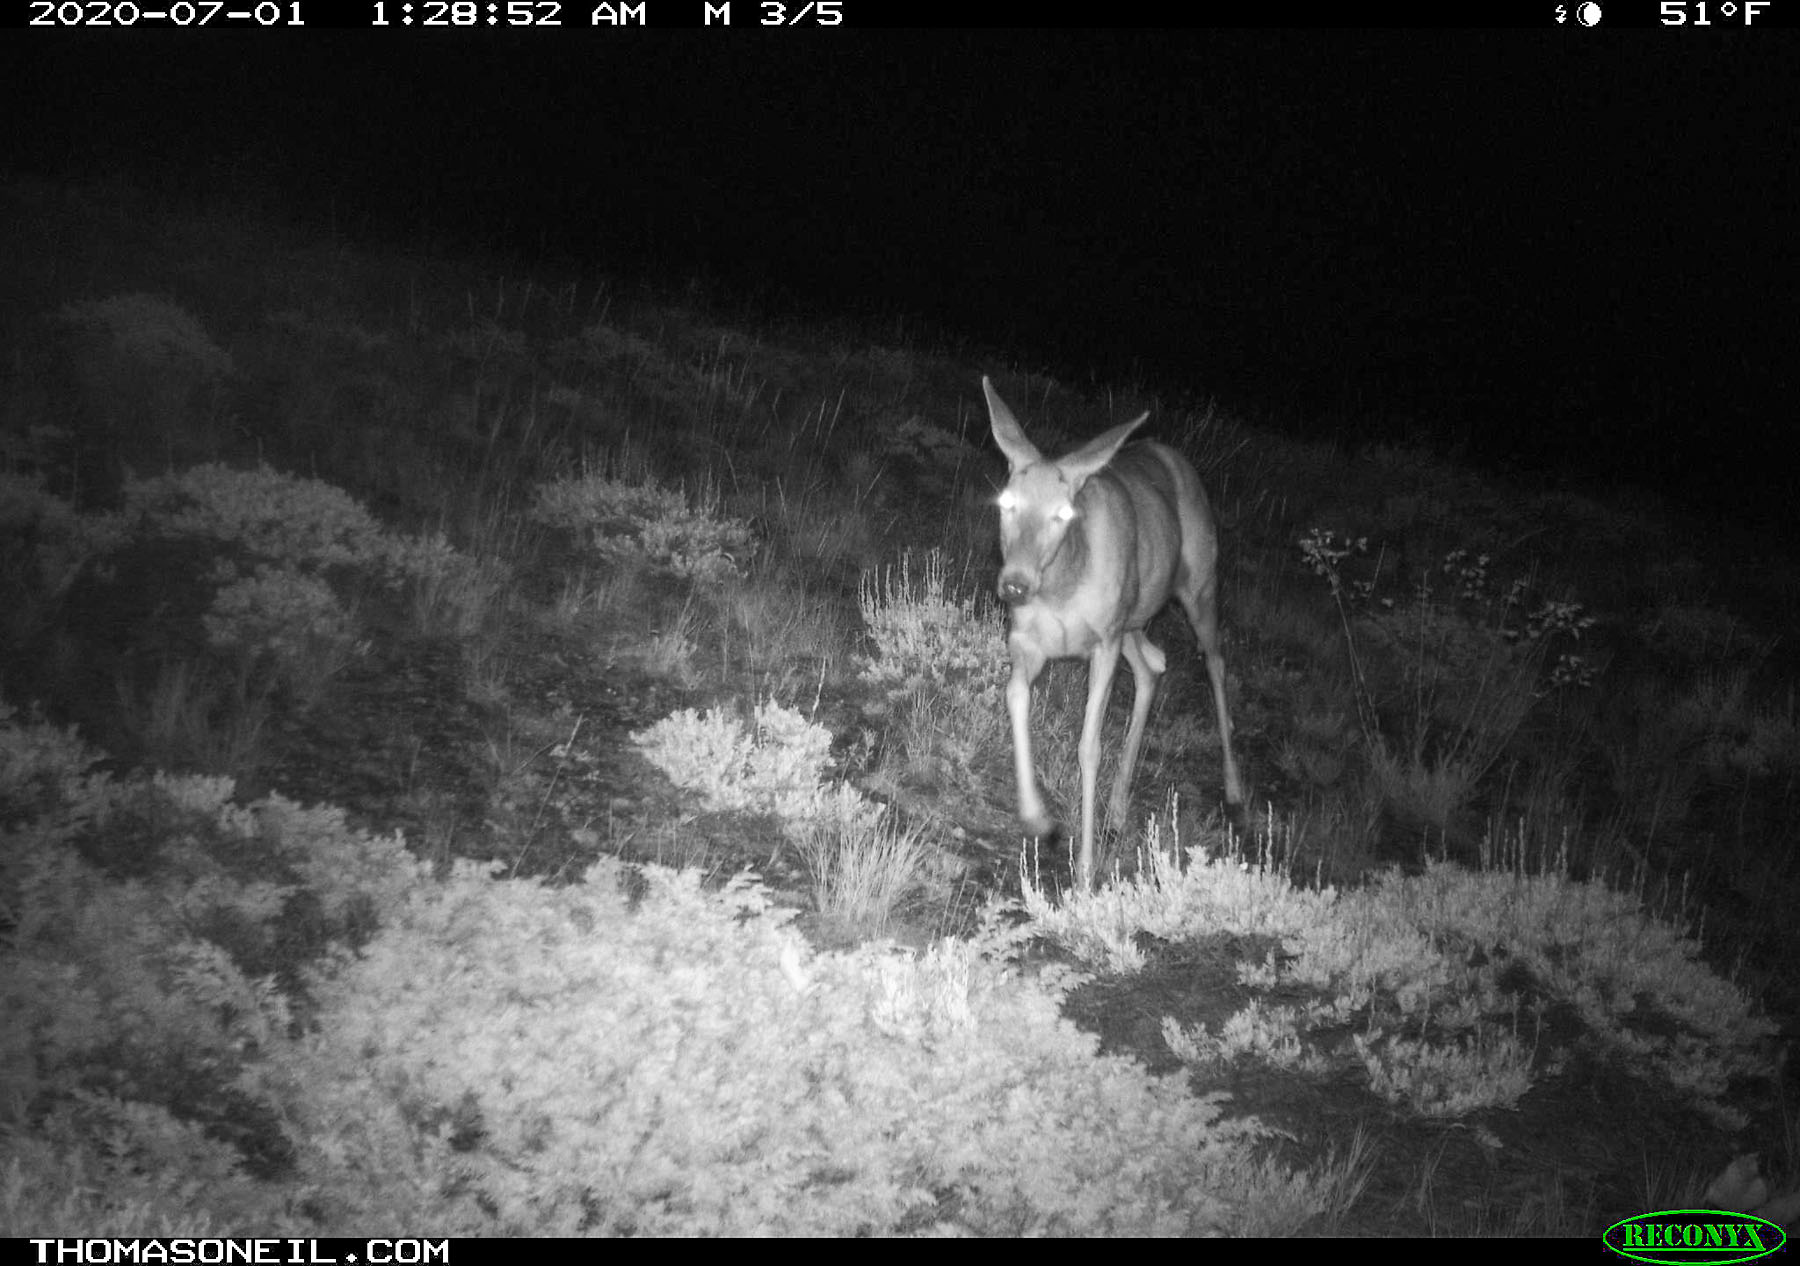 Deer near Luther, MT, 2020.